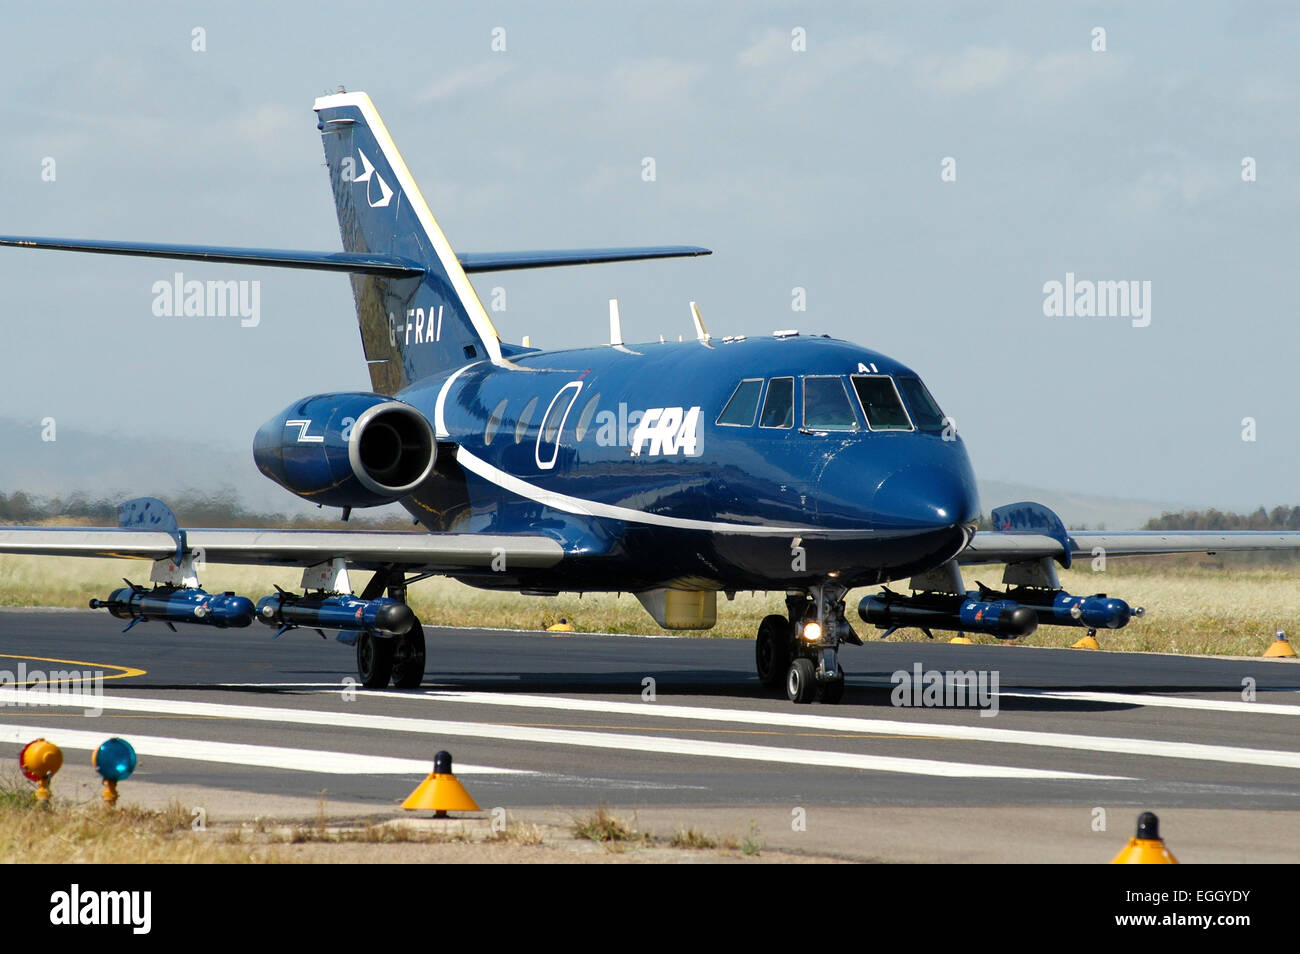 dassault-falcon-20-of-flight-refuelling-aviation-company-used-for-EGGYDY.jpg